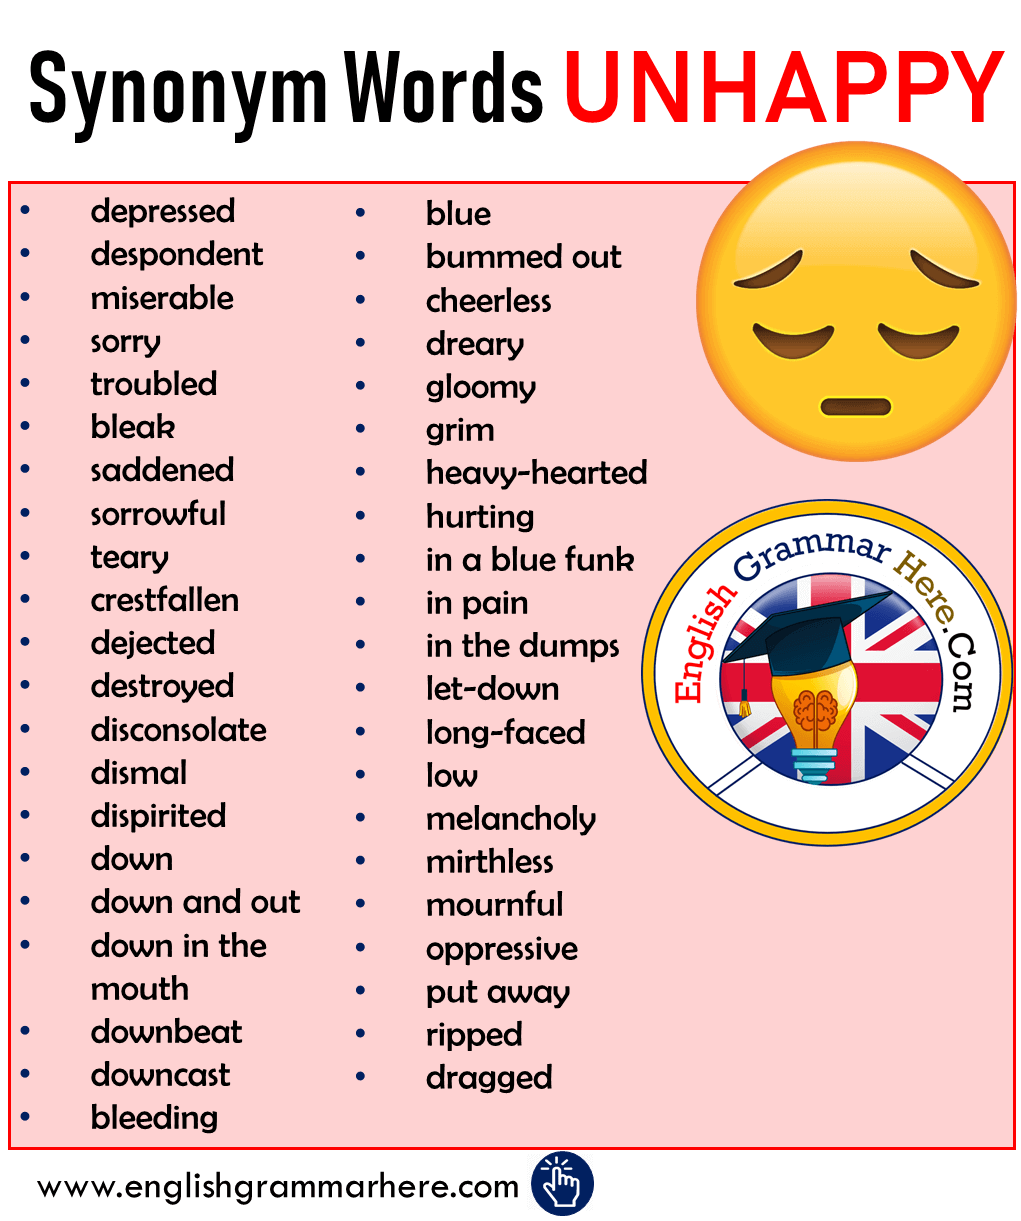 English Synonym Words UNHAPPY, Ways to Say UNHAPPY